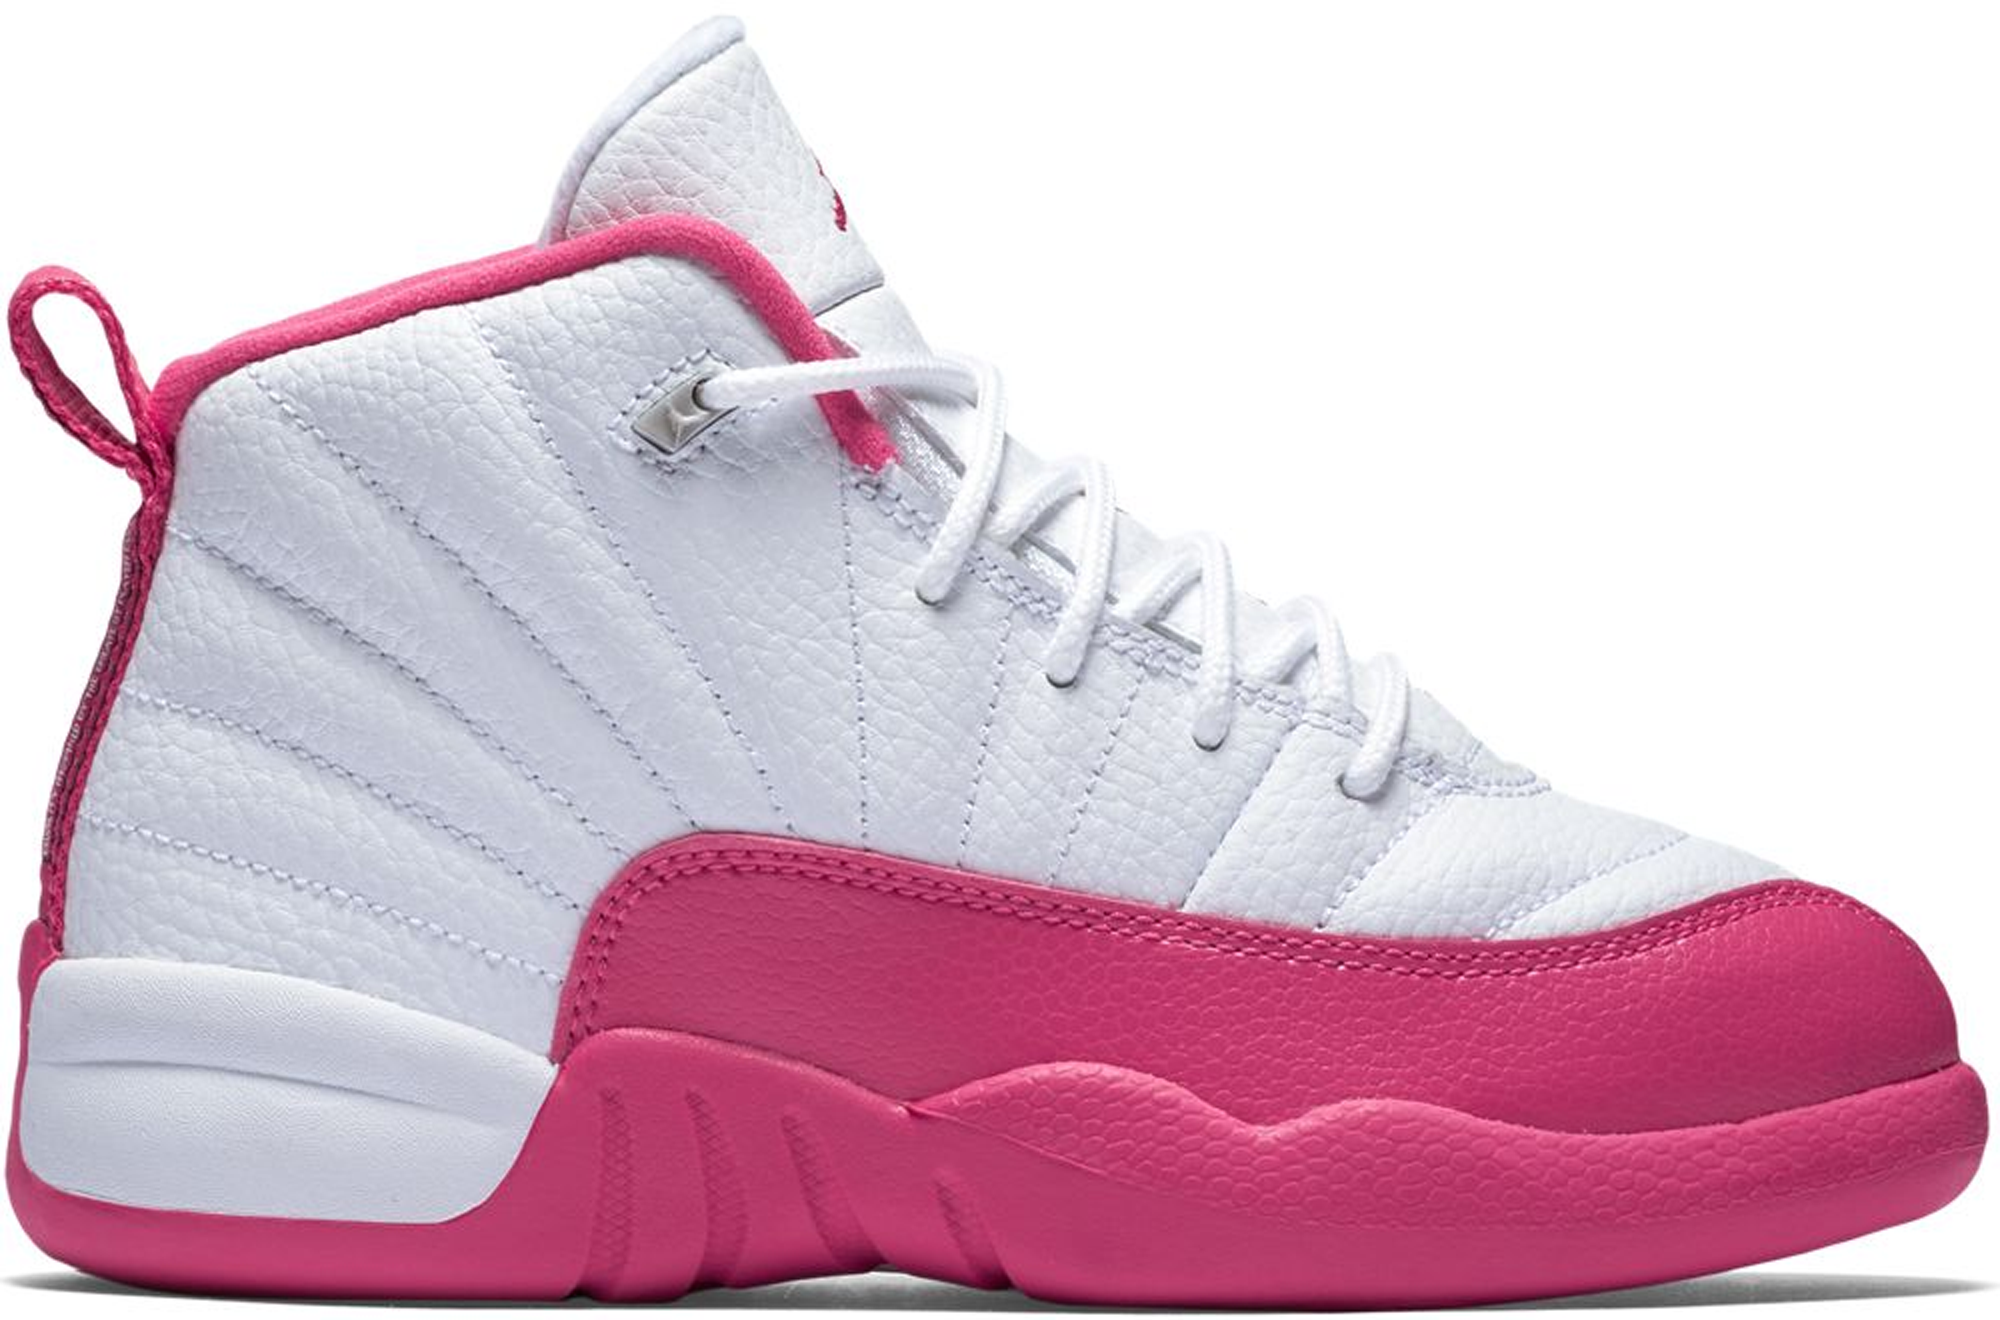 Jordan 12 Retro Dynamic Pink (PS 